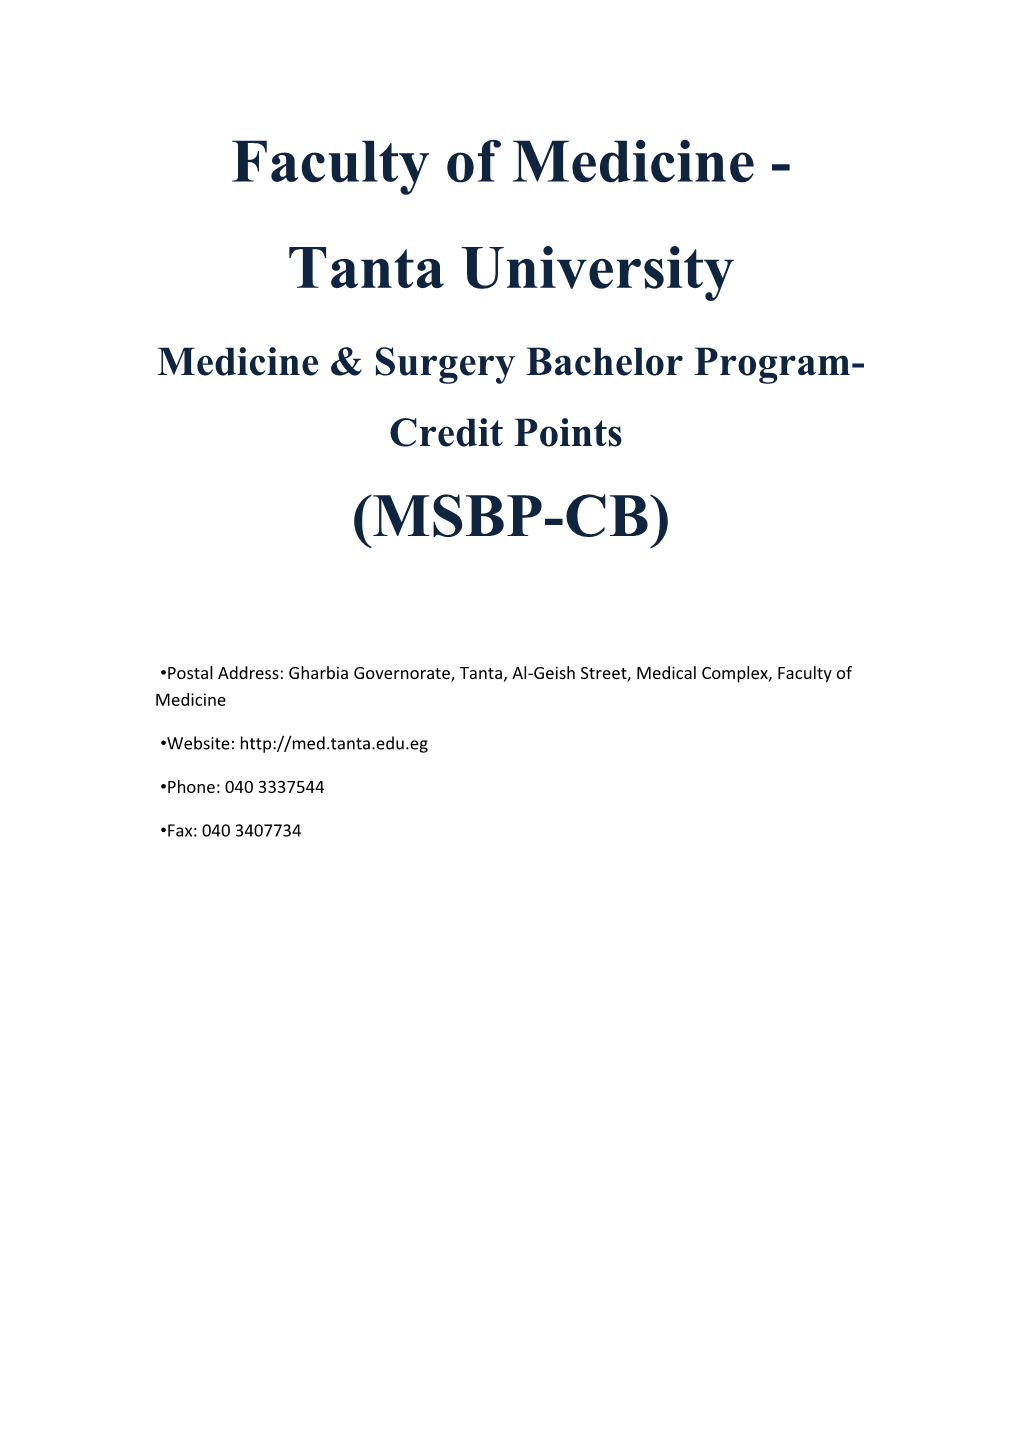 Faculty of Medicine - Tanta University